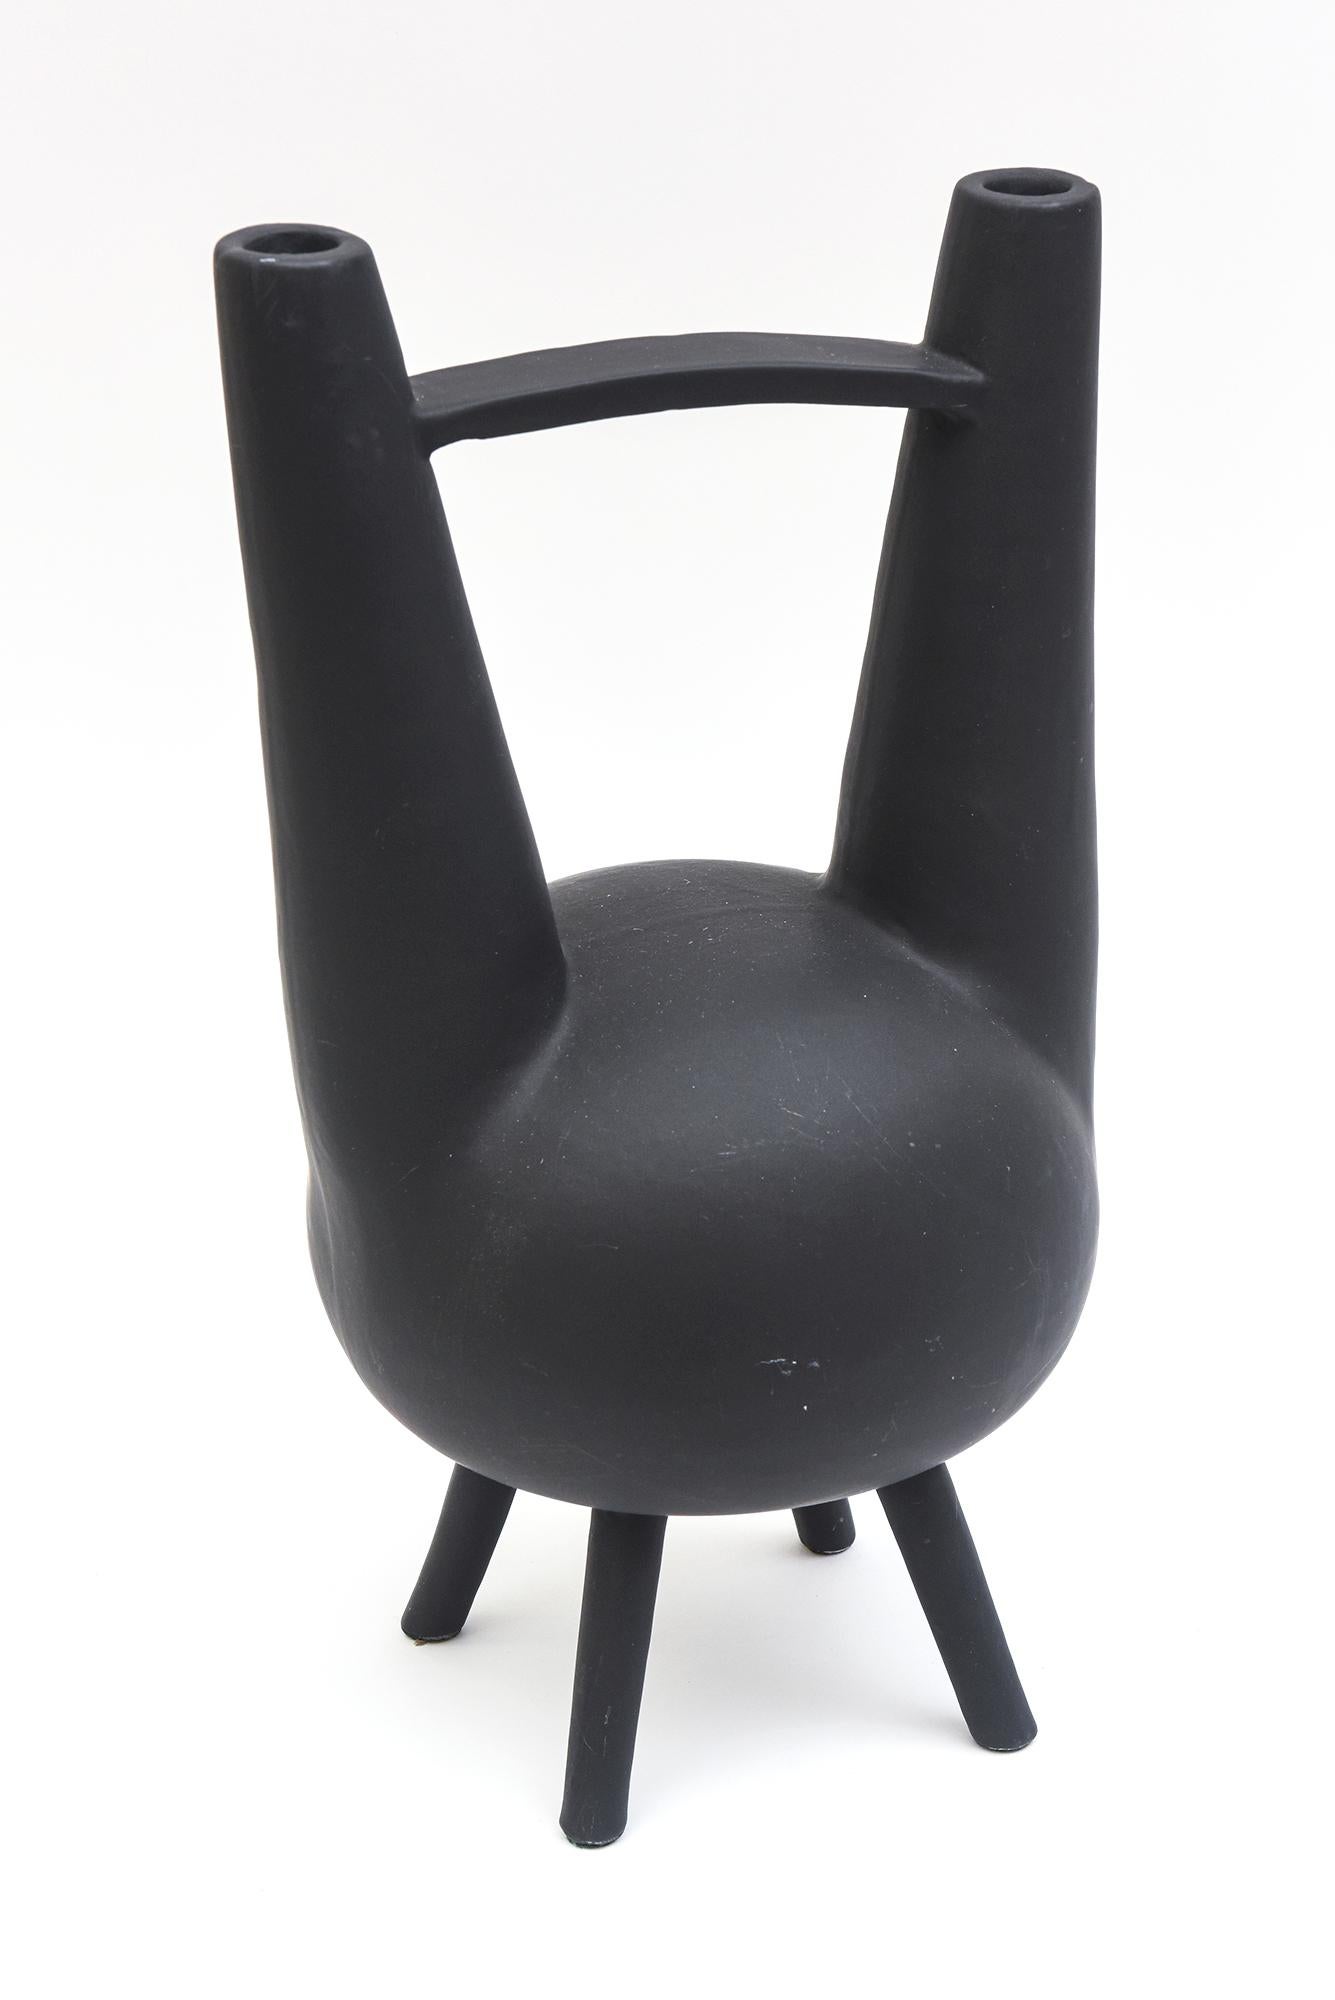  Pampaloni Gio Ponti Design Black Matt Ceramic Abstract Vessel Sculpture Italian 6